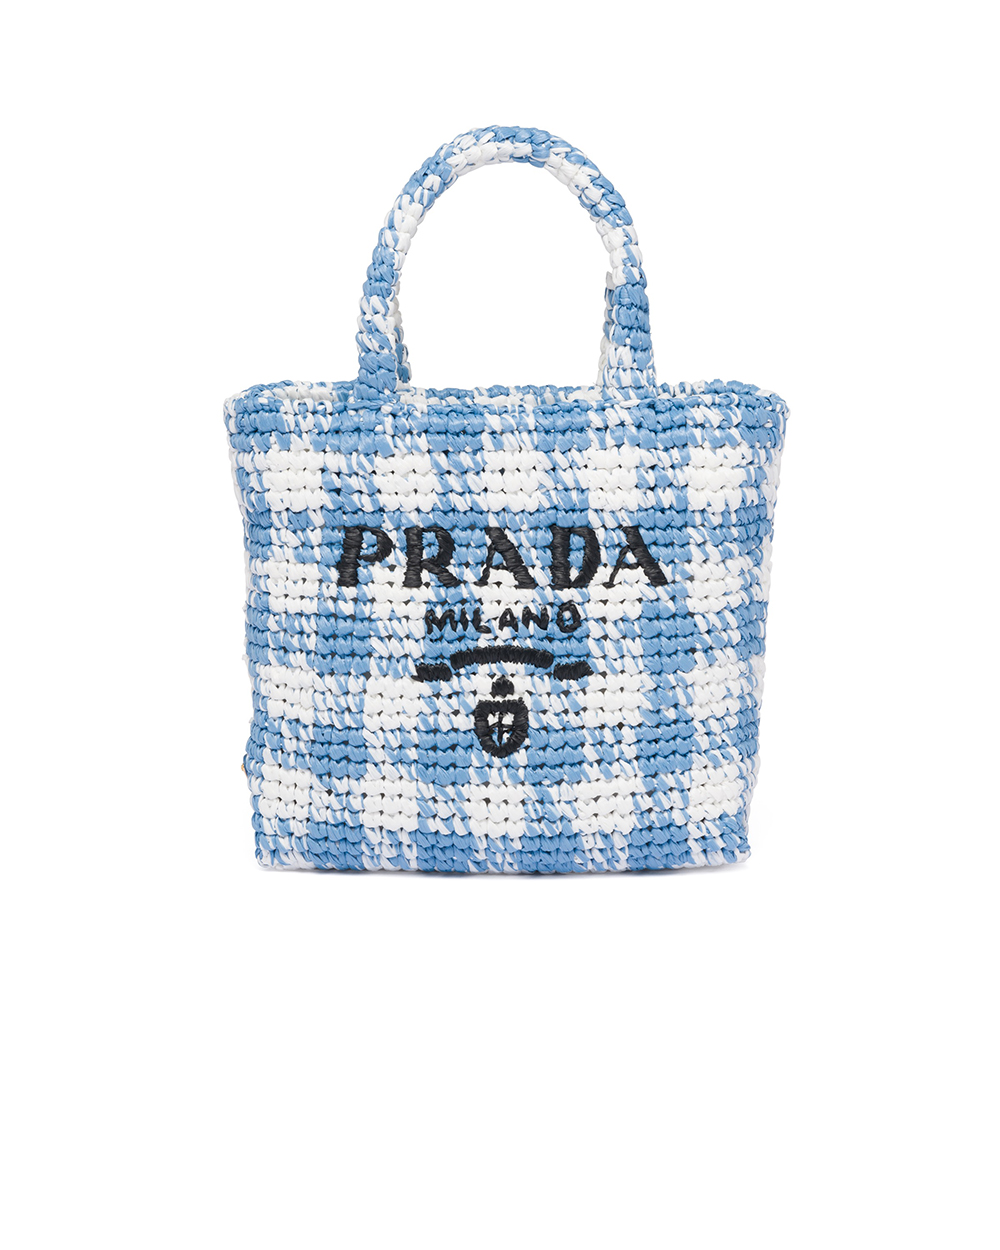 PRADAがポップイン/アップストア『Prada Tropico』をPRADA銀座店、阪急うめだ本店、ジェイアール名古屋タカシマヤにて開催